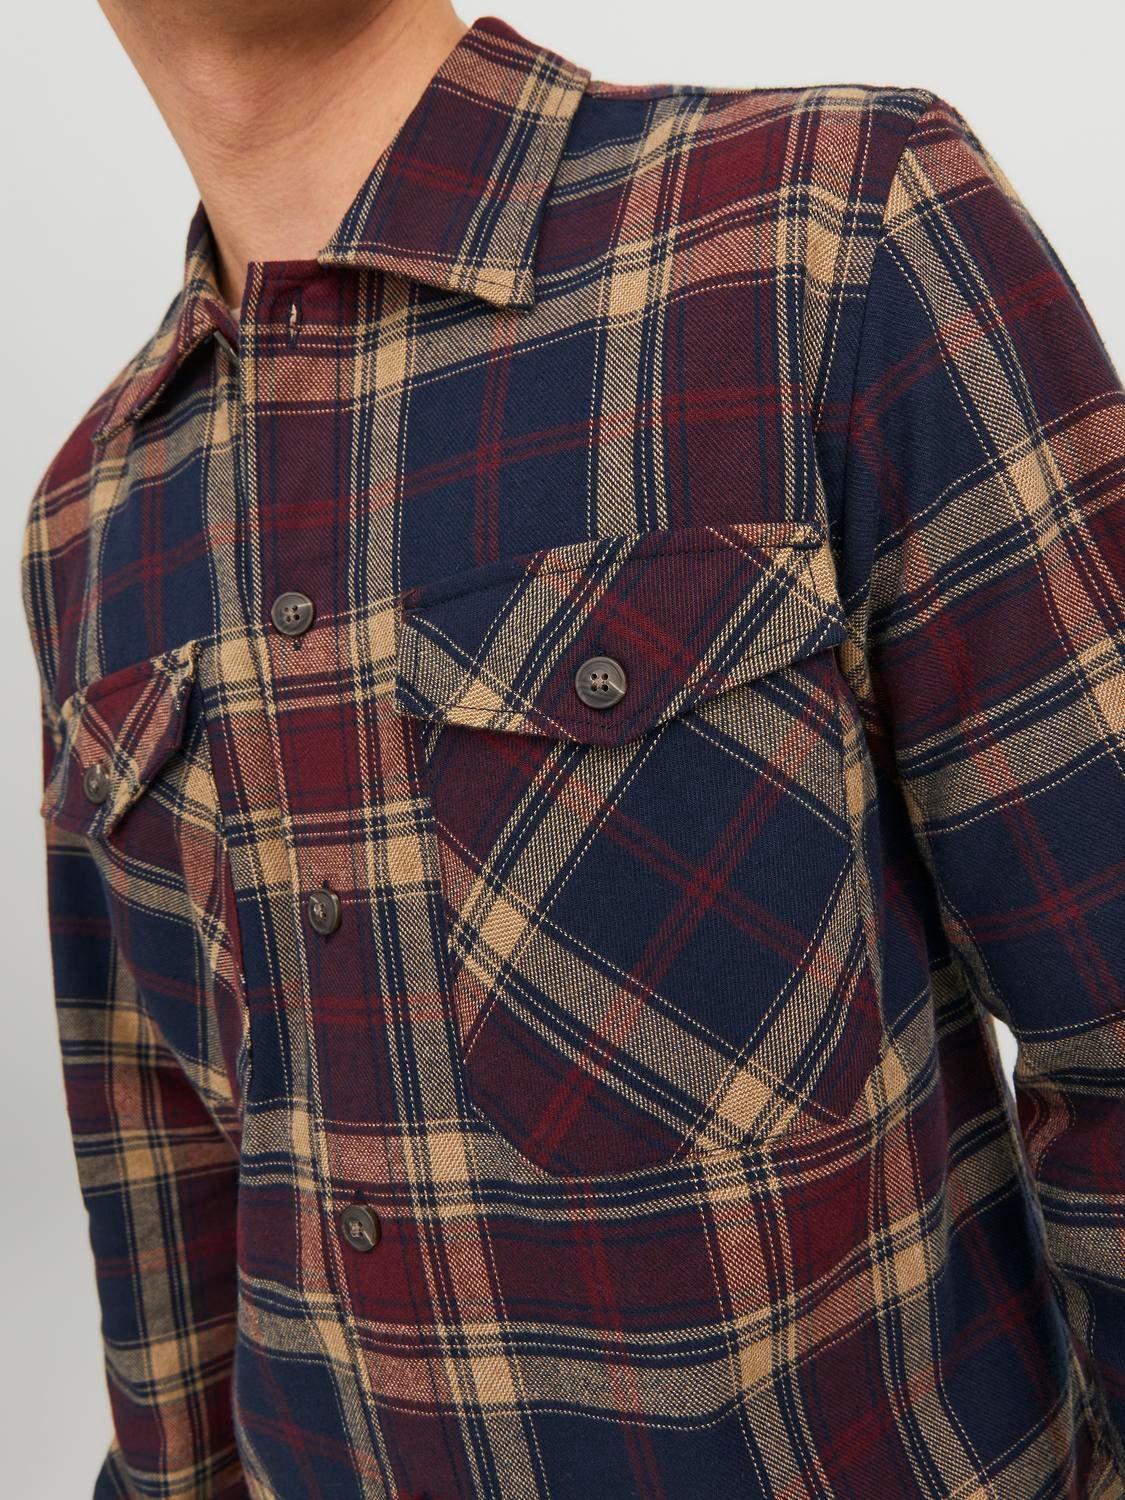 Jack & Jones Comfort Fit Geruit overhemd -Port Royale - 12235986